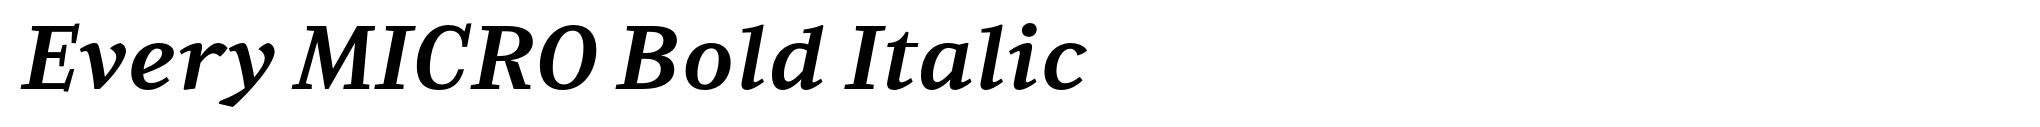 Every MICRO Bold Italic image